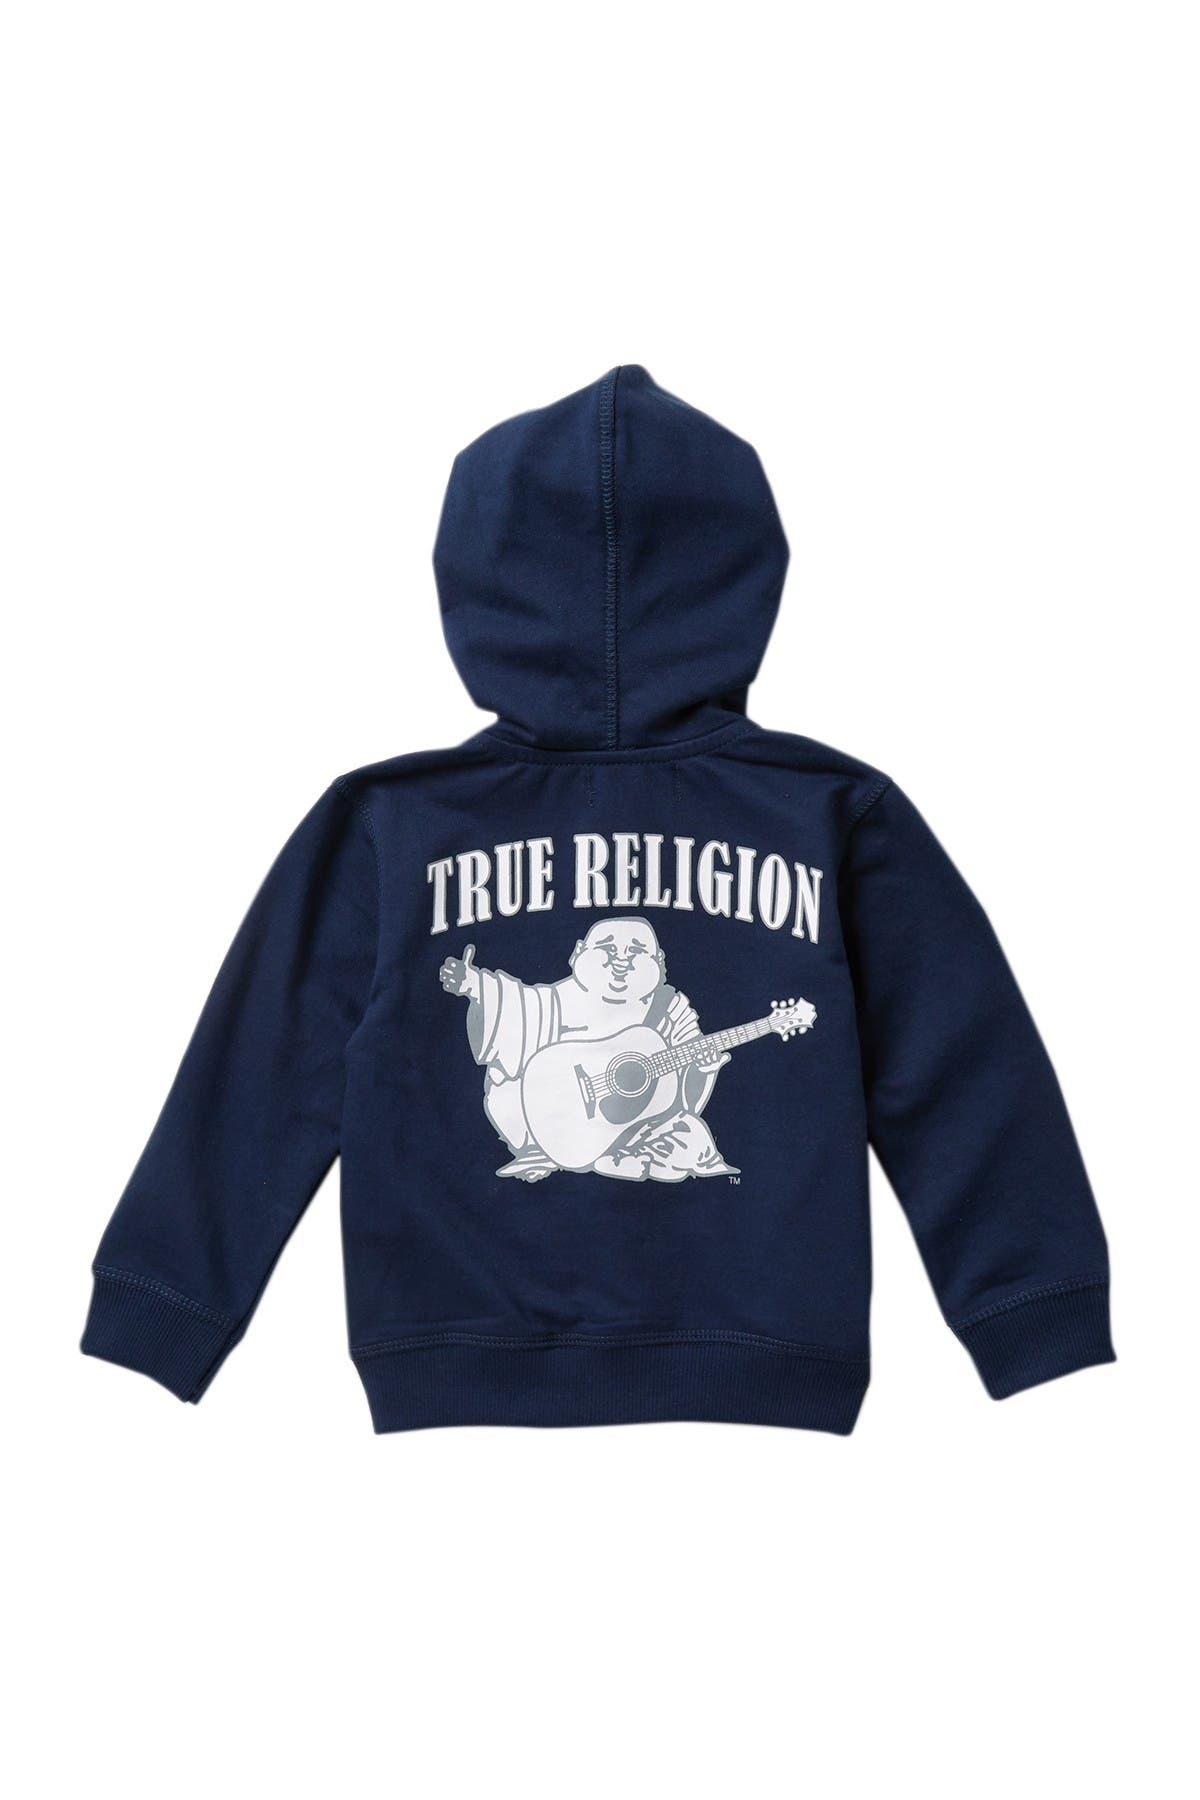 true religion hoodie sweatpants set